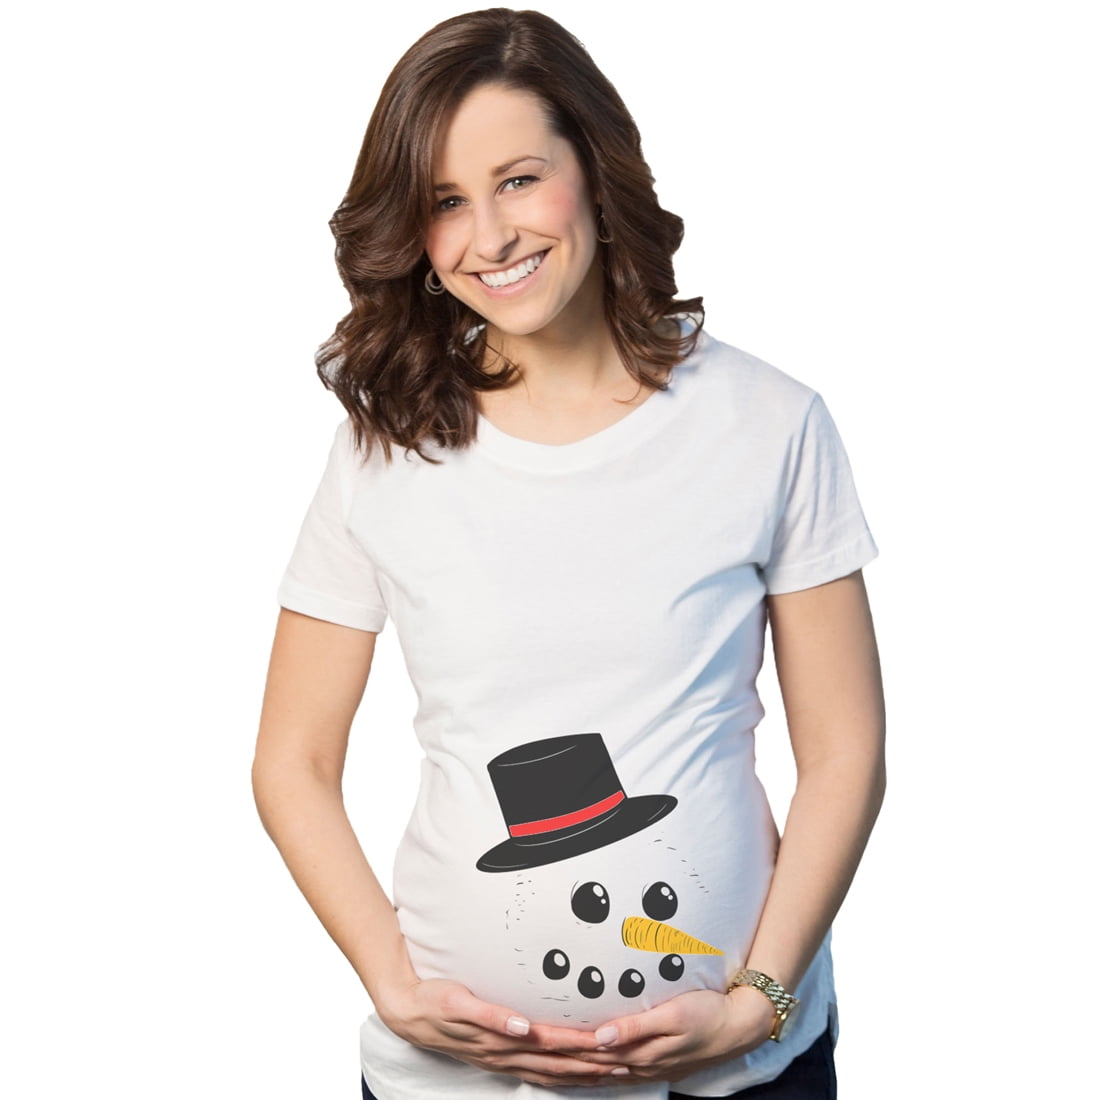 Preggers Maternity T Shirt Pregnancy Announcement Shirts Funny Pregnancy Tees Women Casual Short Sleeve Tops Shirt